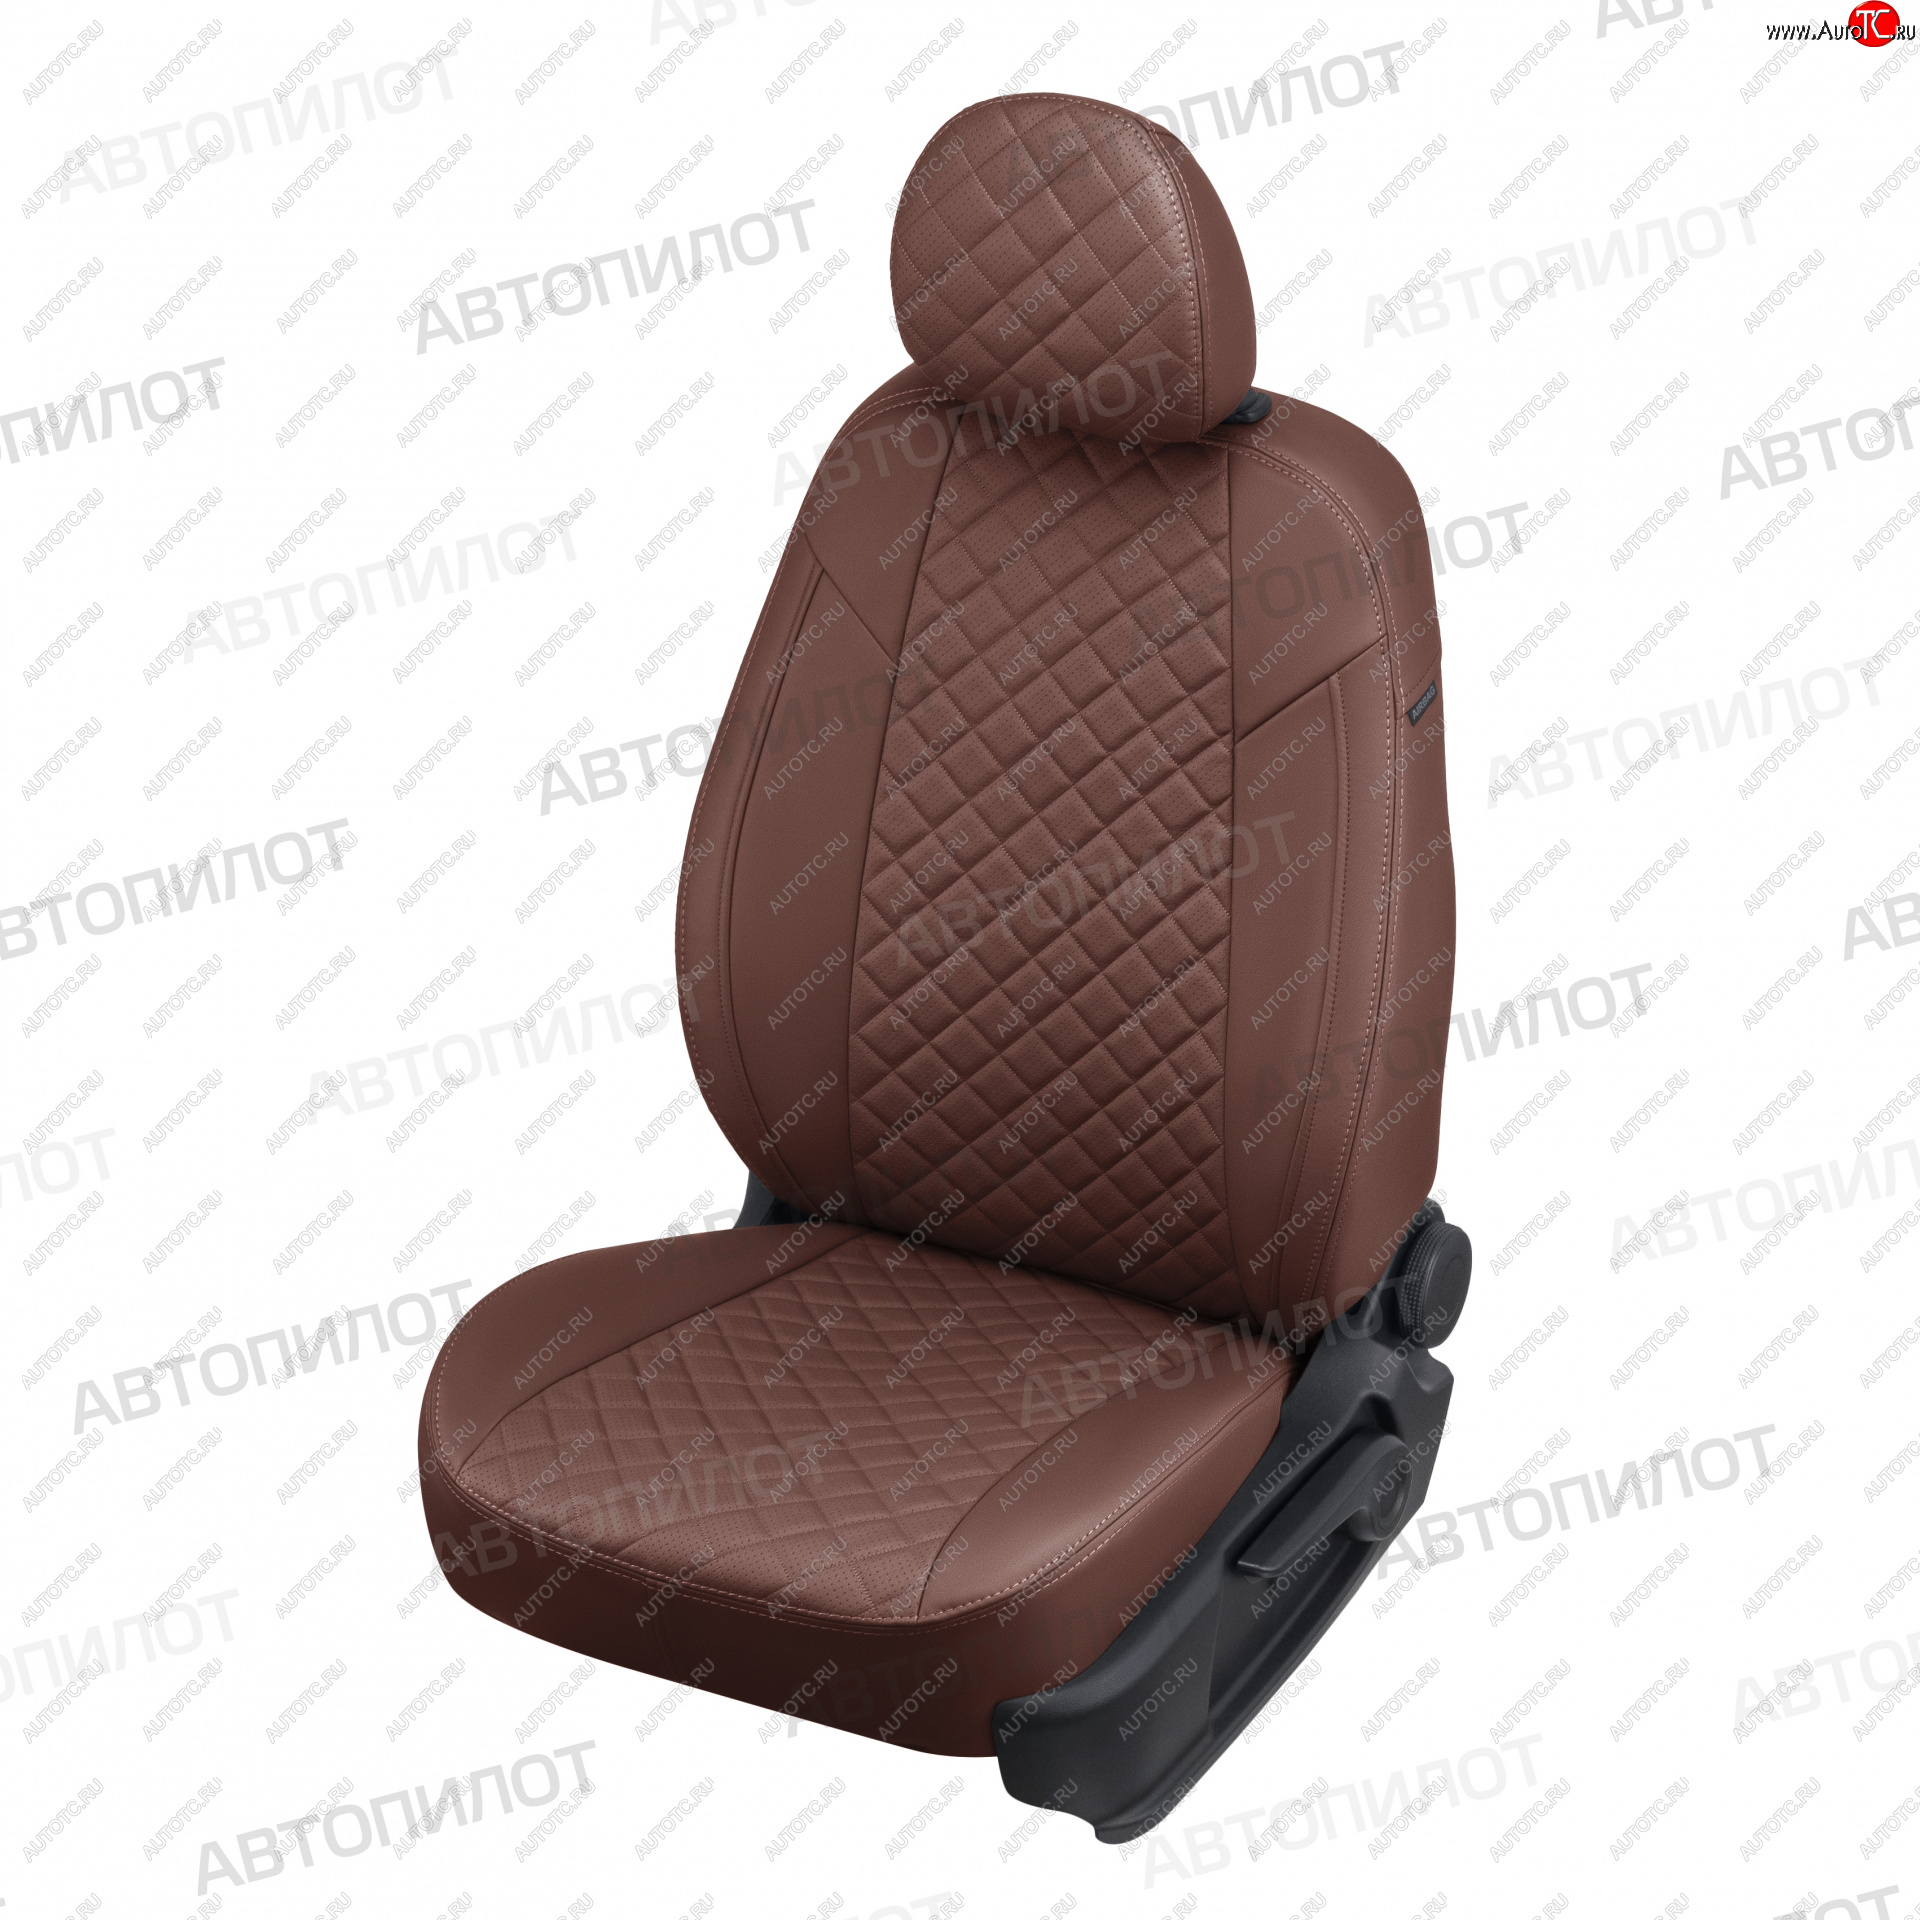 13 999 р. Чехлы сидений (экокожа, спл./п.кресла Спорт) Автопилот Ромб  BMW 3 серия  E46 (1998-2005) (темно-коричневый)